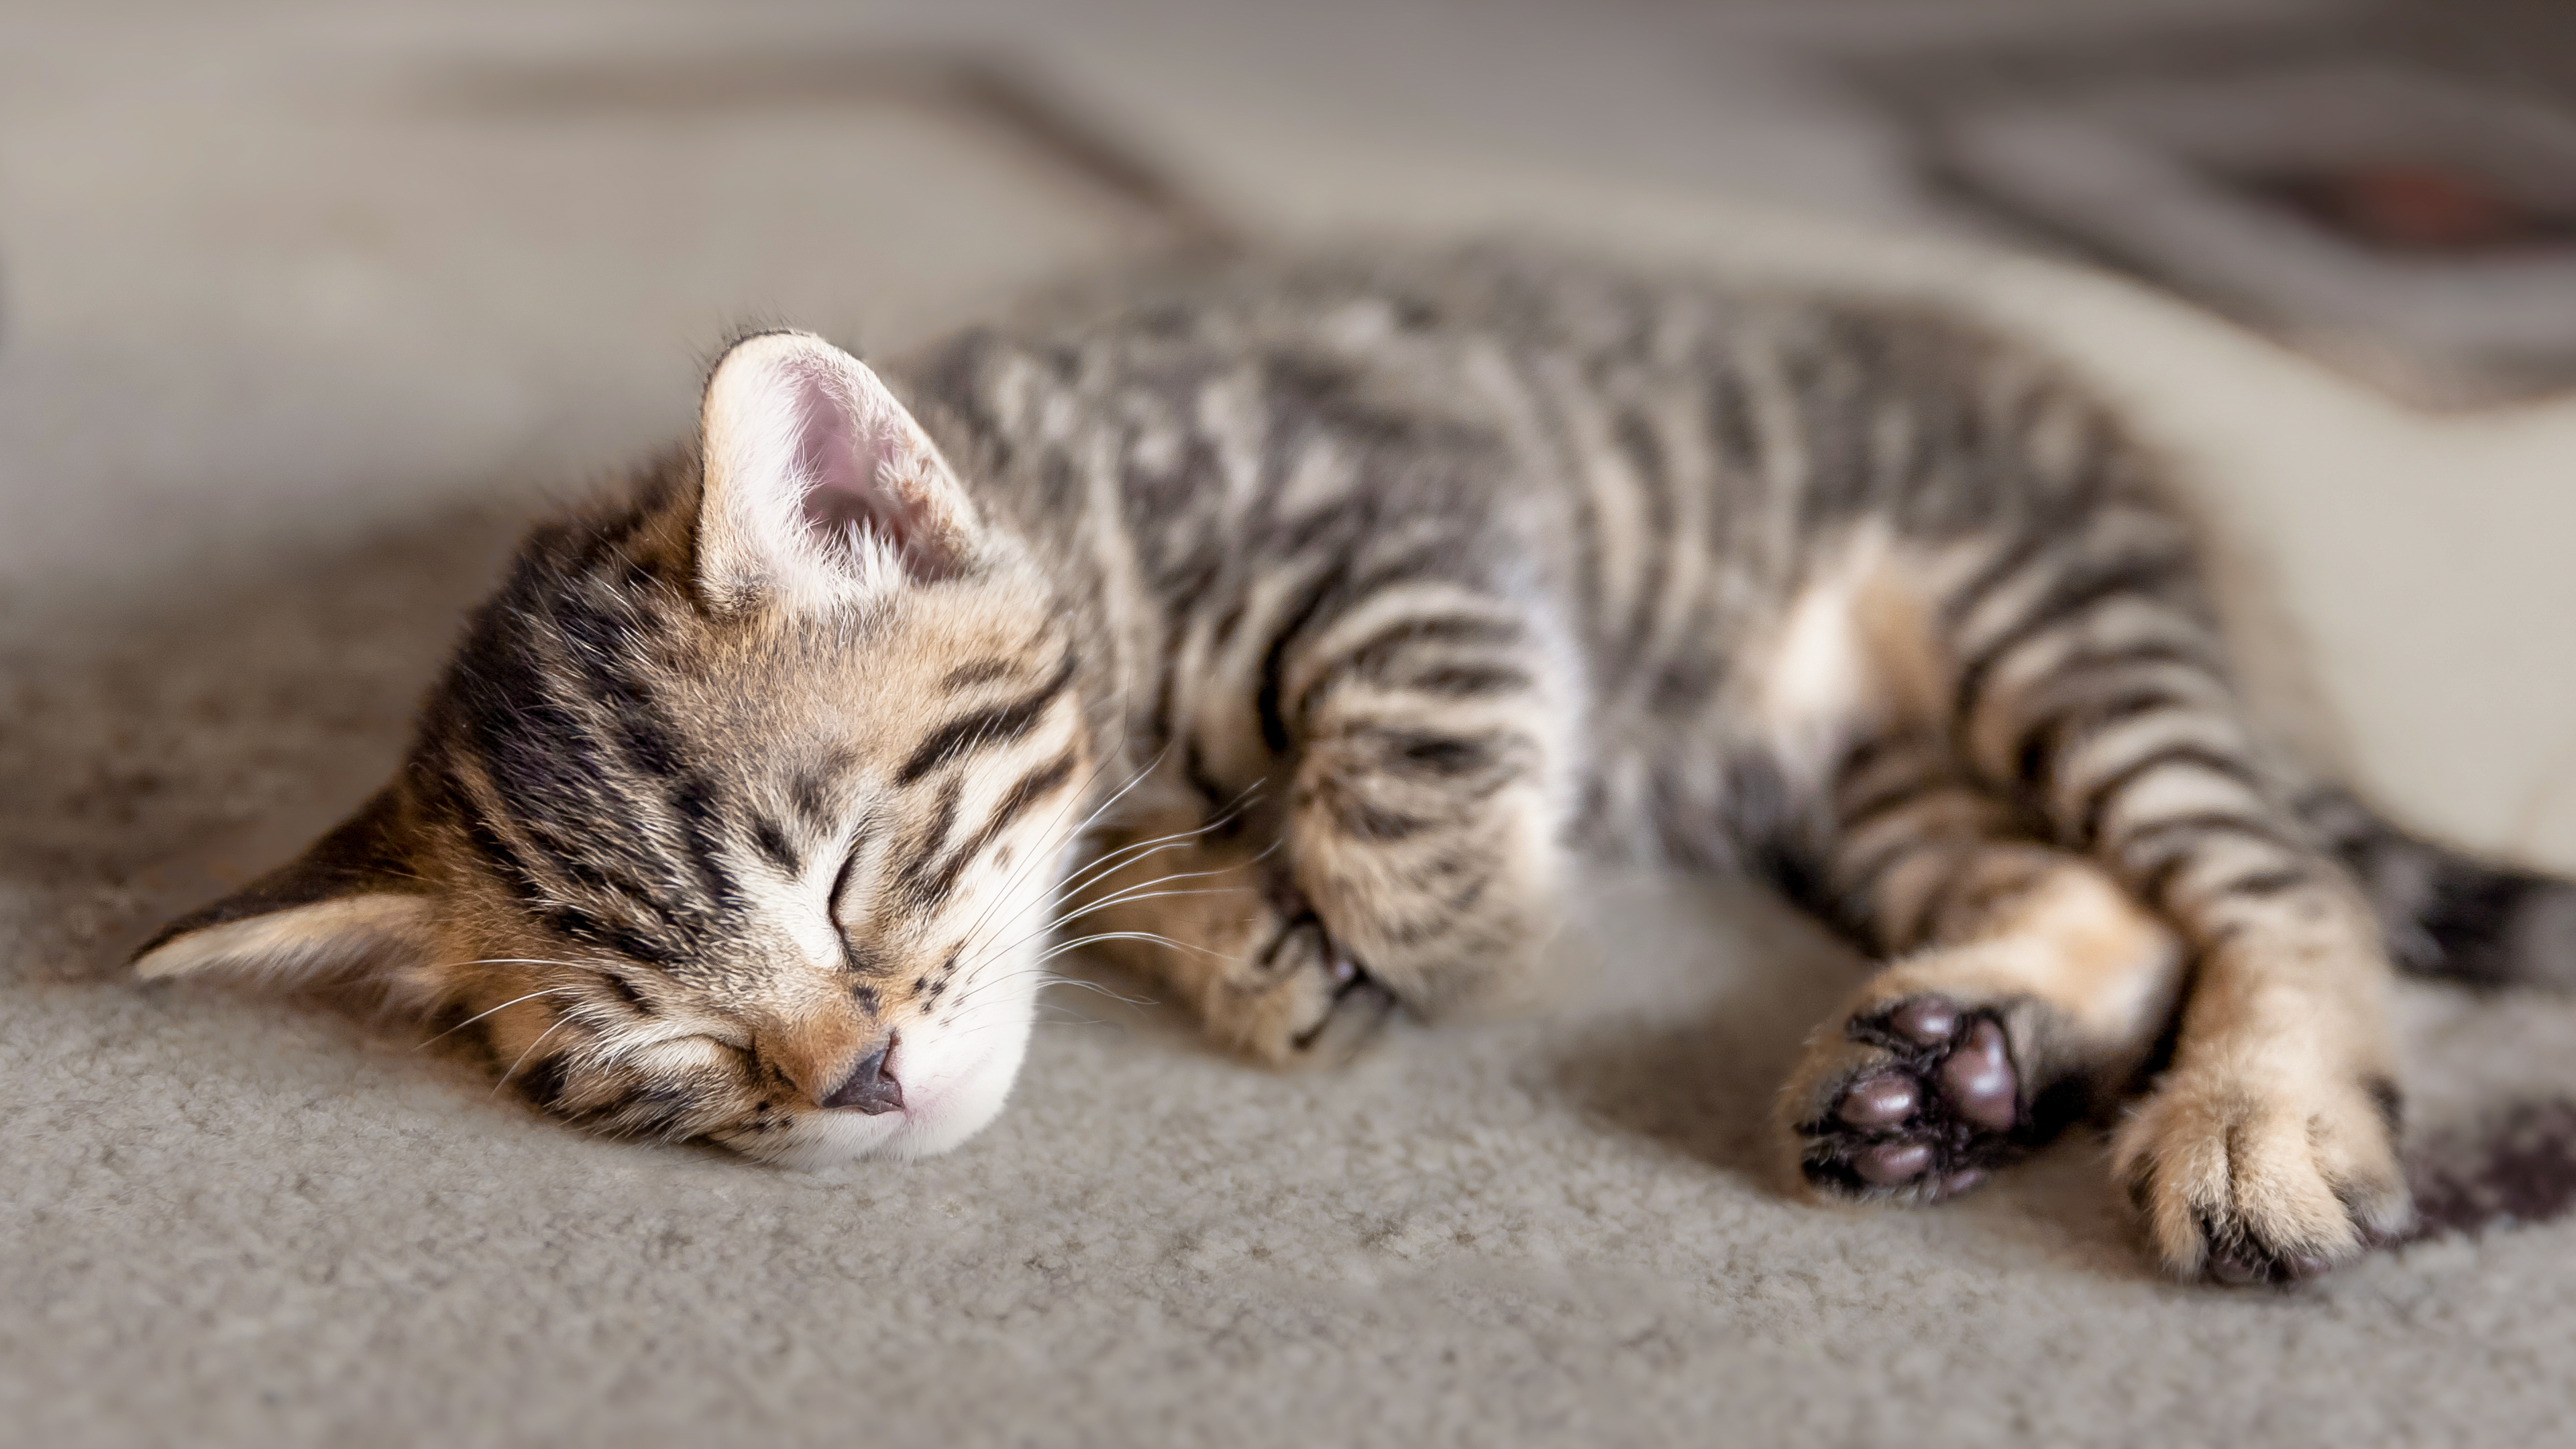 Kitten sleeping on a grey carpet